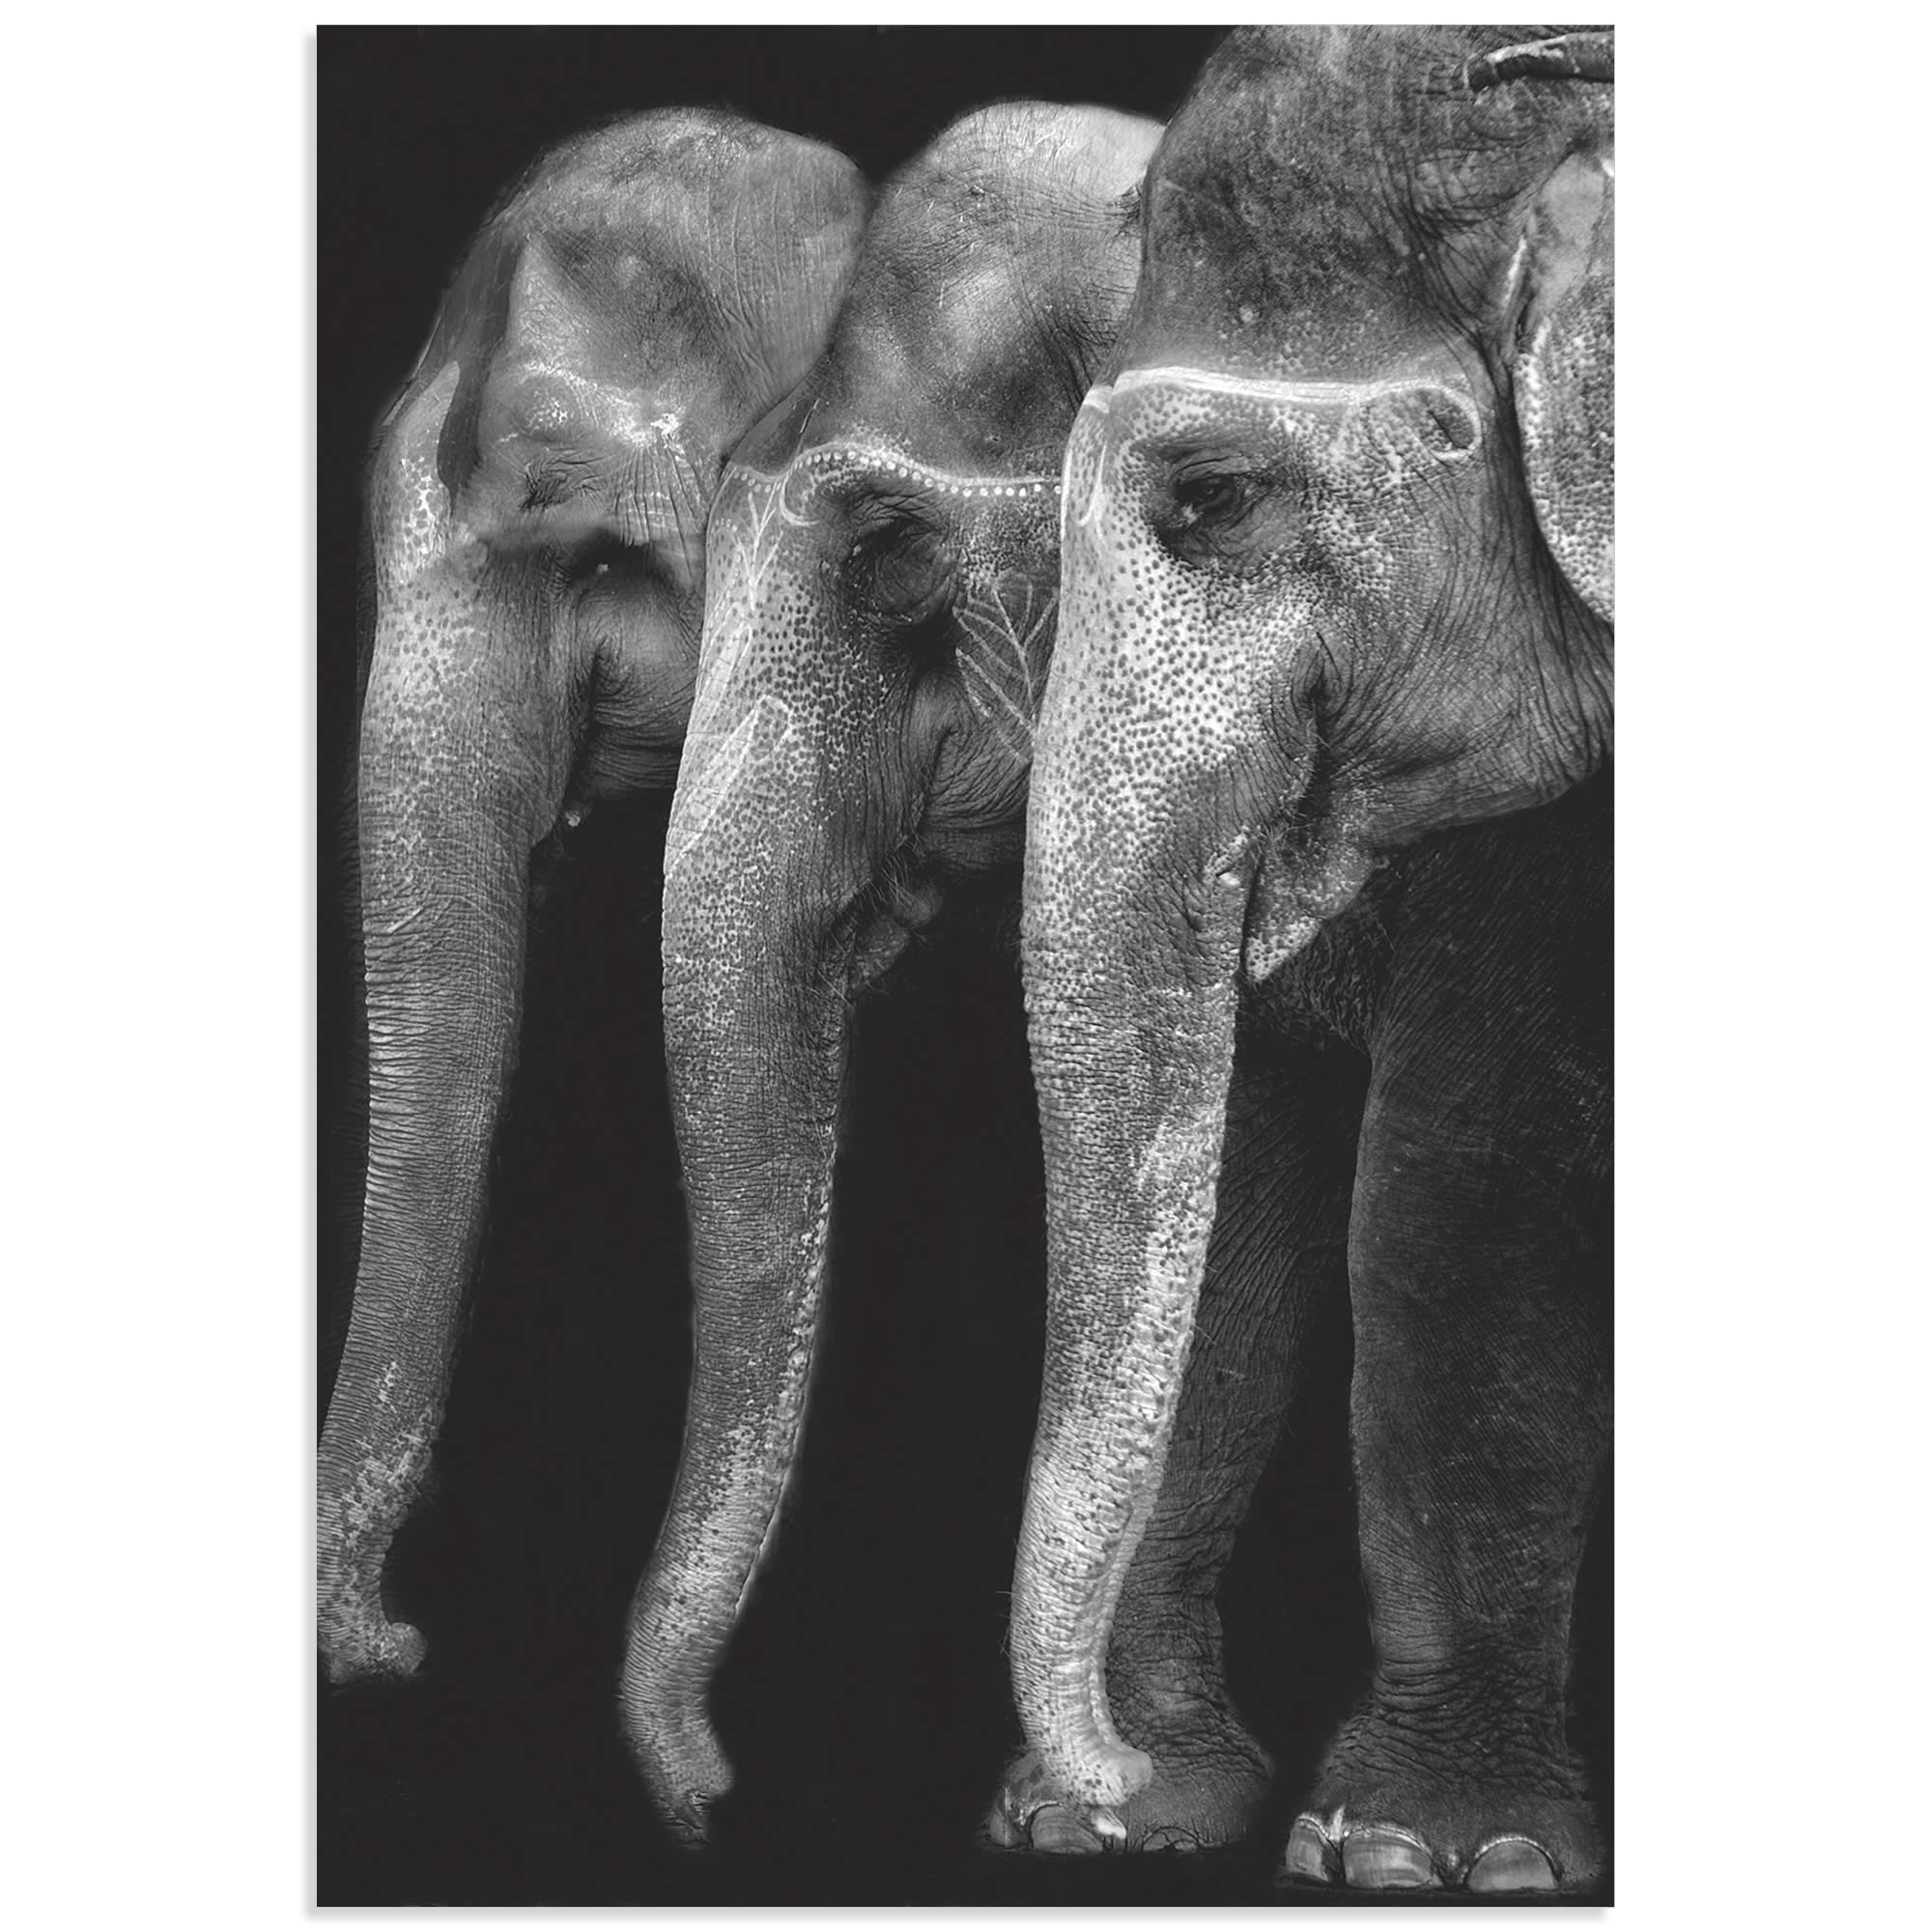 Great Elephants by Yvette Depaepe - Elephant Wall Art on Metal or Acrylic